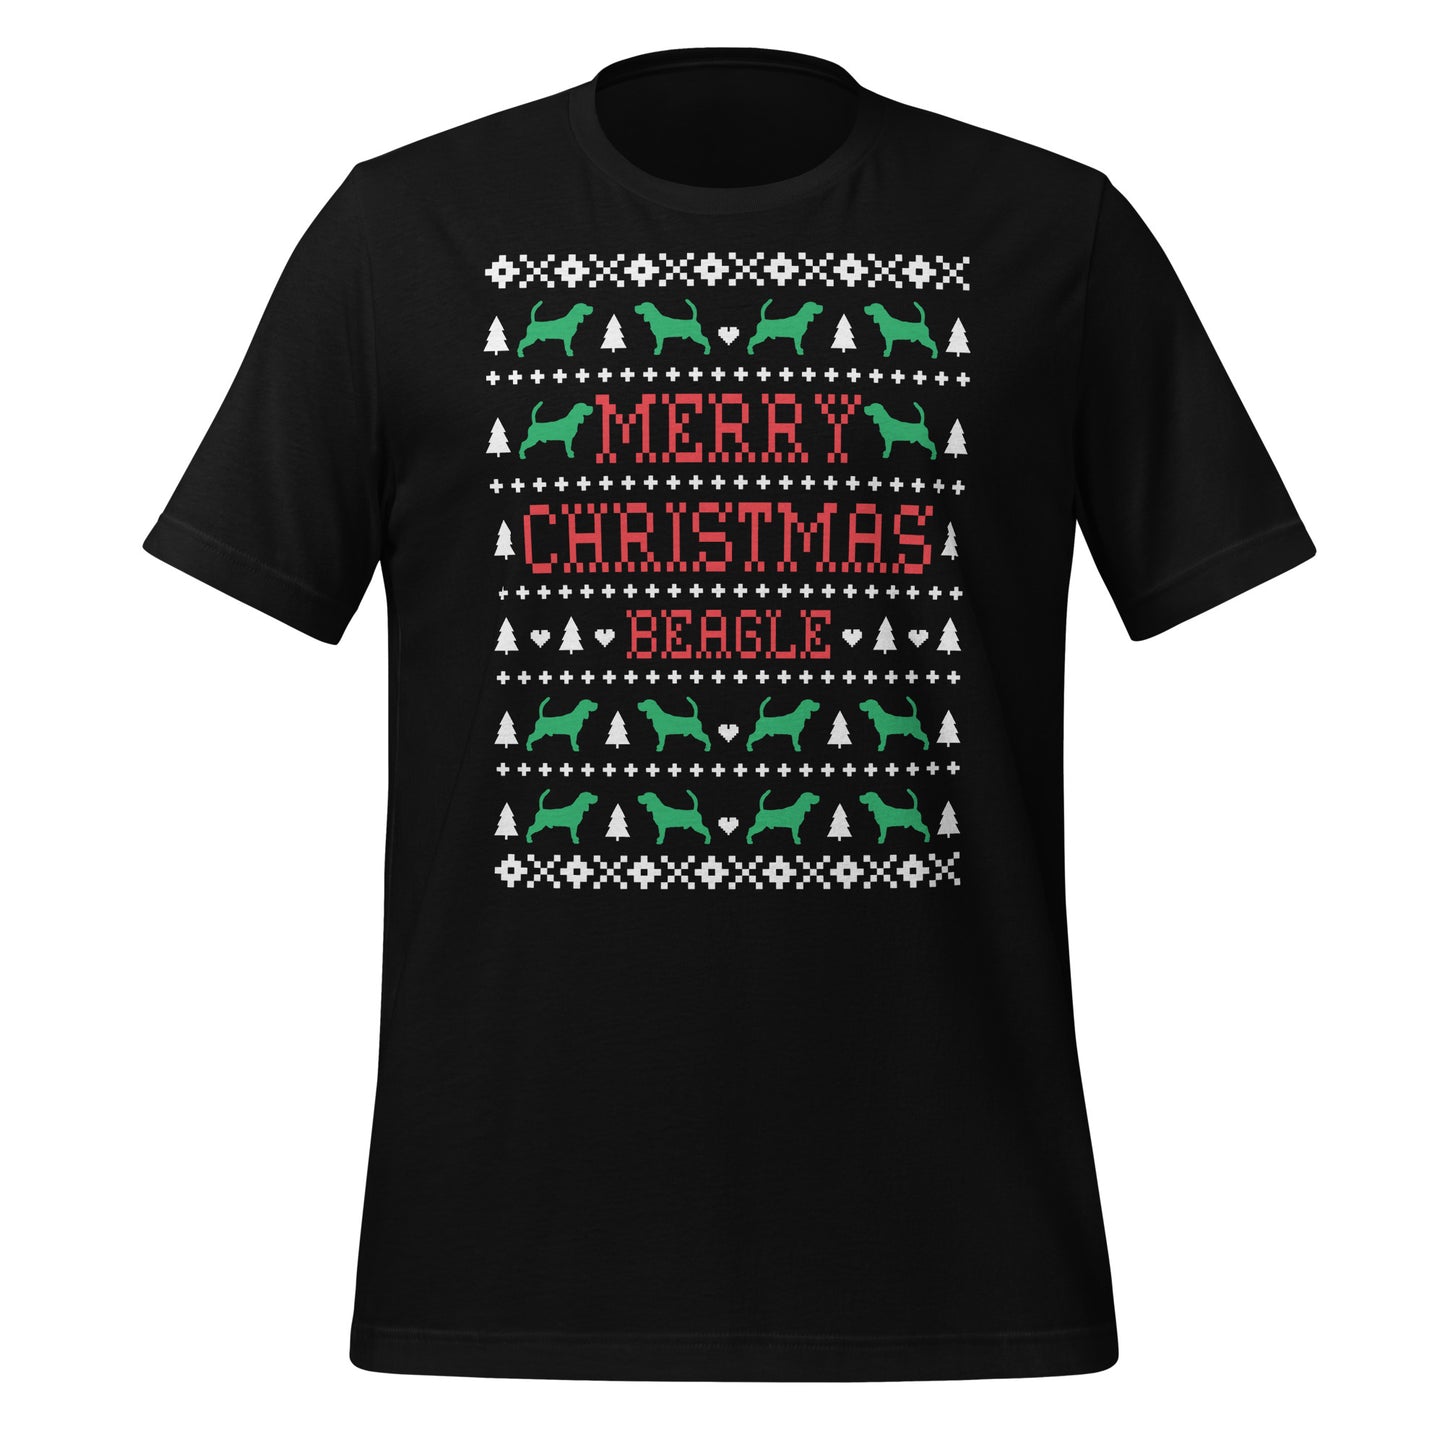 Beagle Ugly Christmas t-shirt black by Dog Artistry.